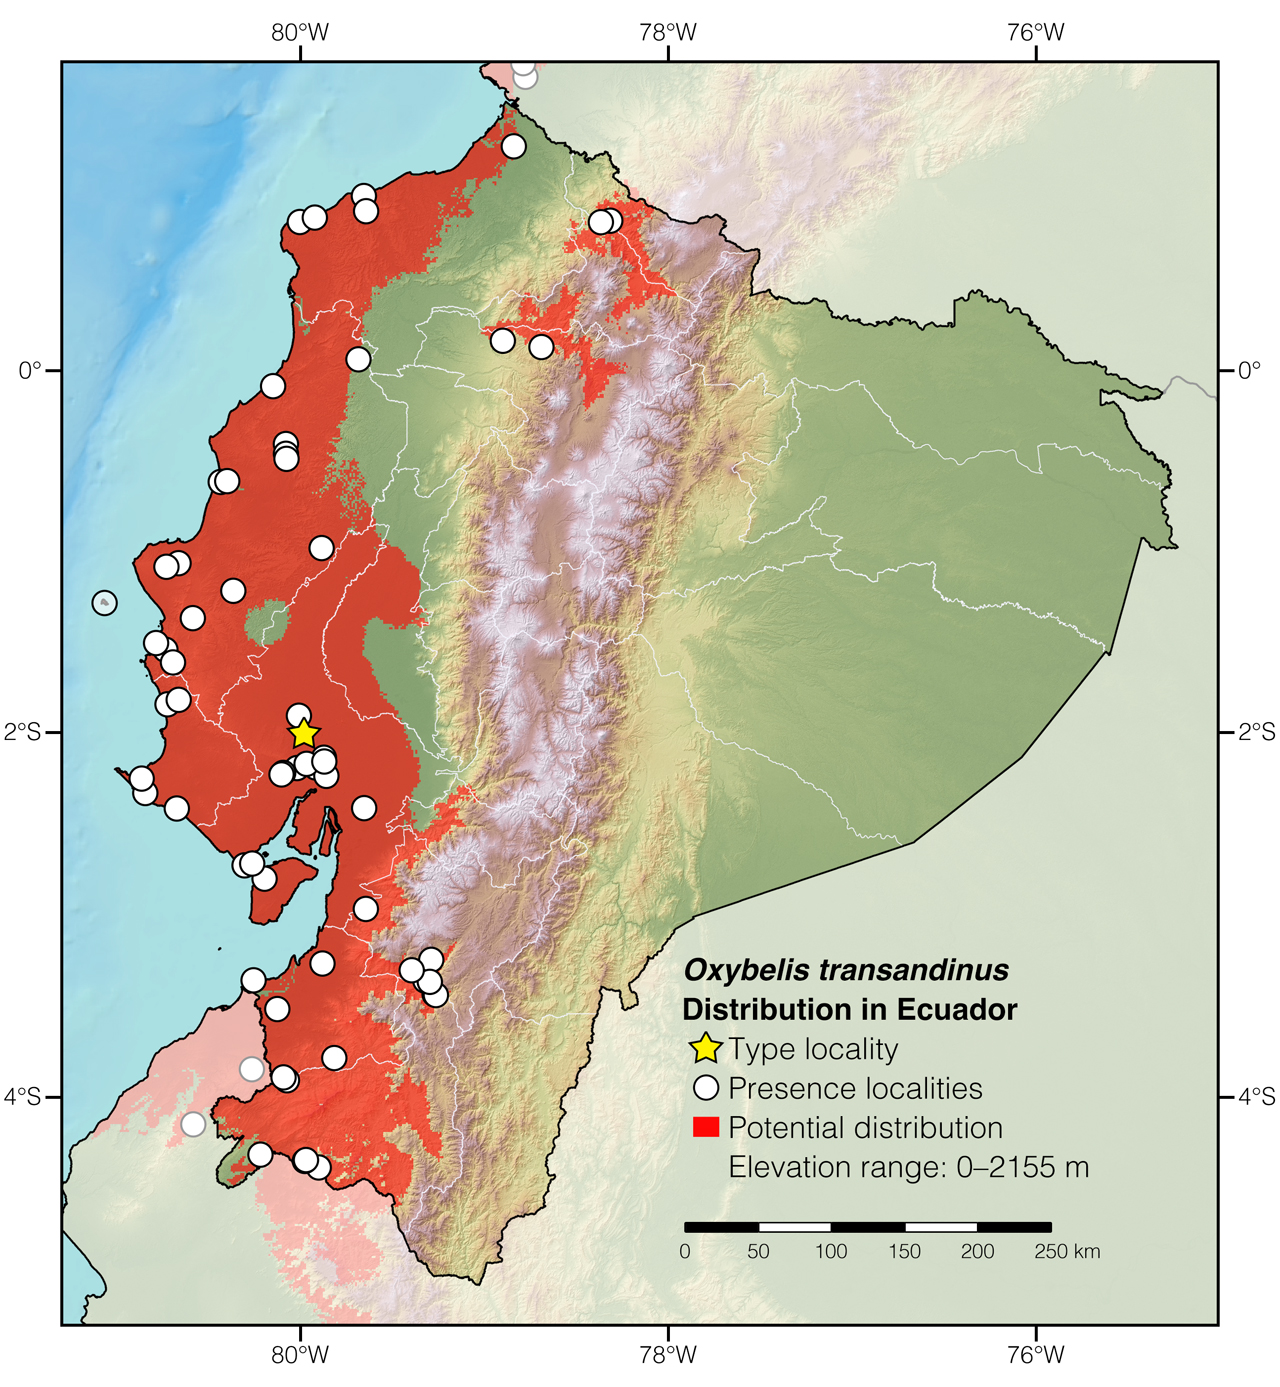 Distribution of Oxybelis transandinus in Ecuador